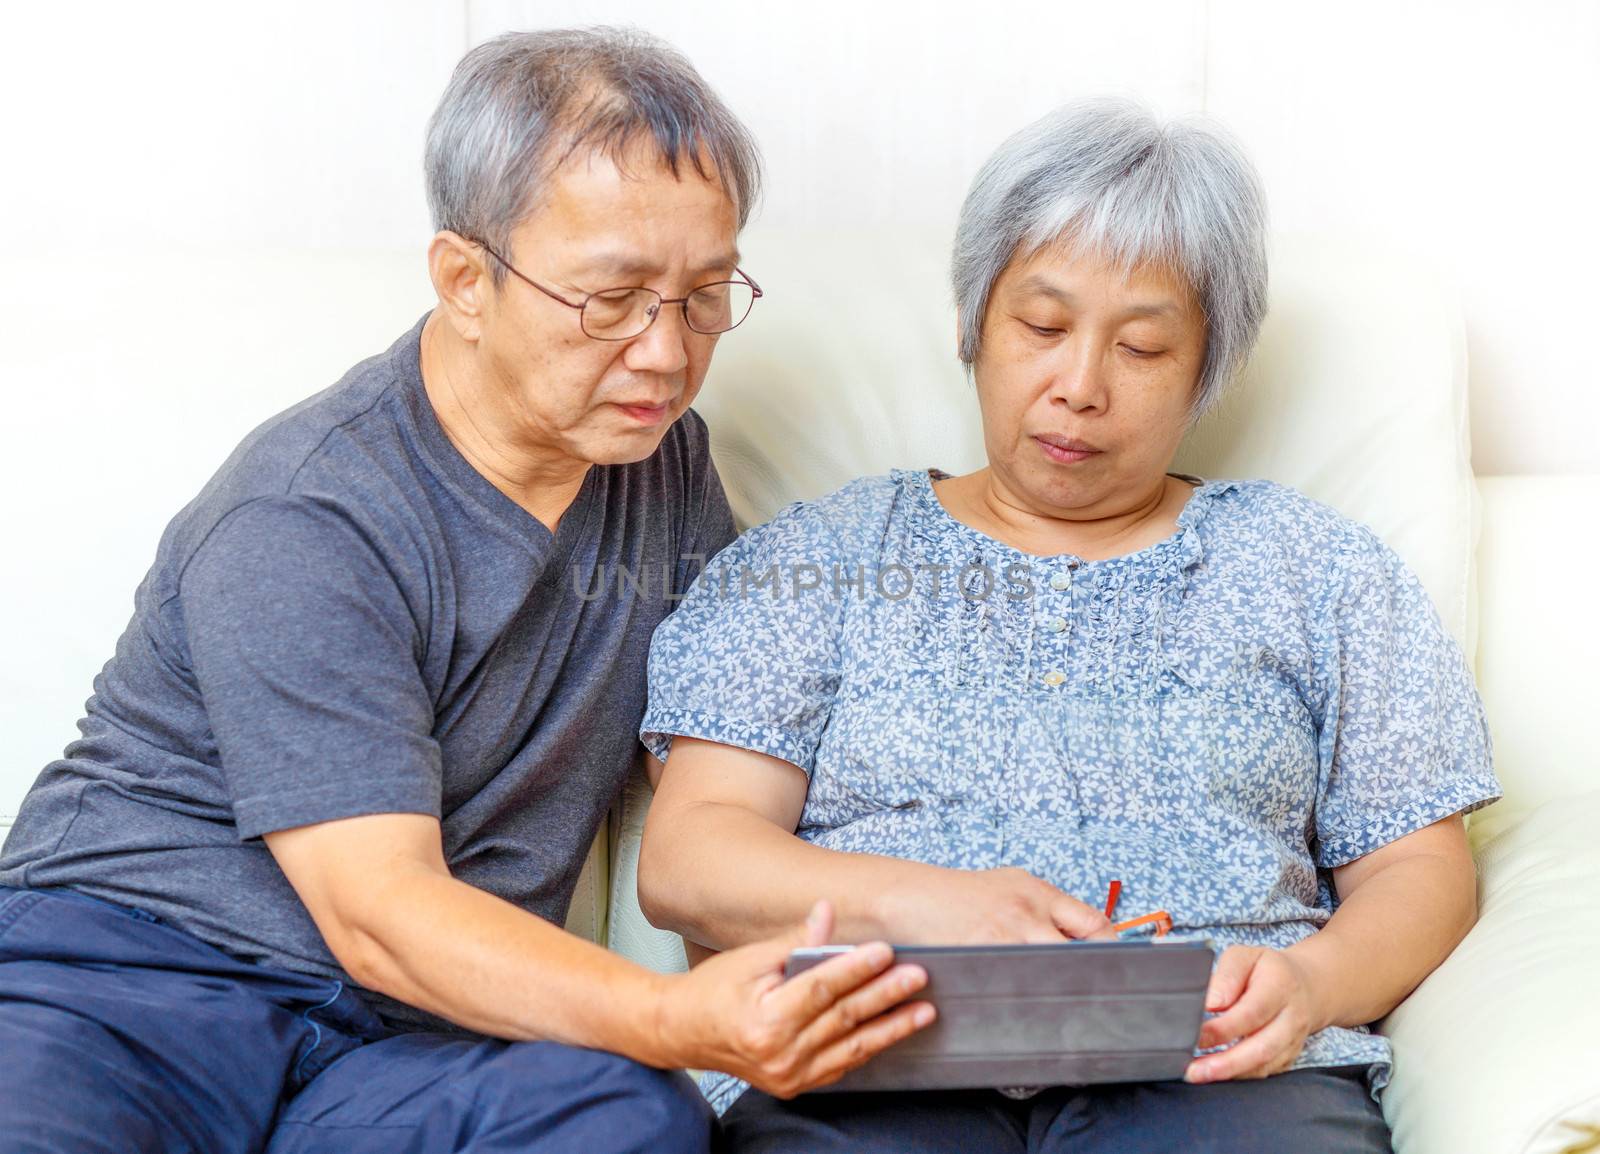 Asian elderly couple using digital tablet by leungchopan